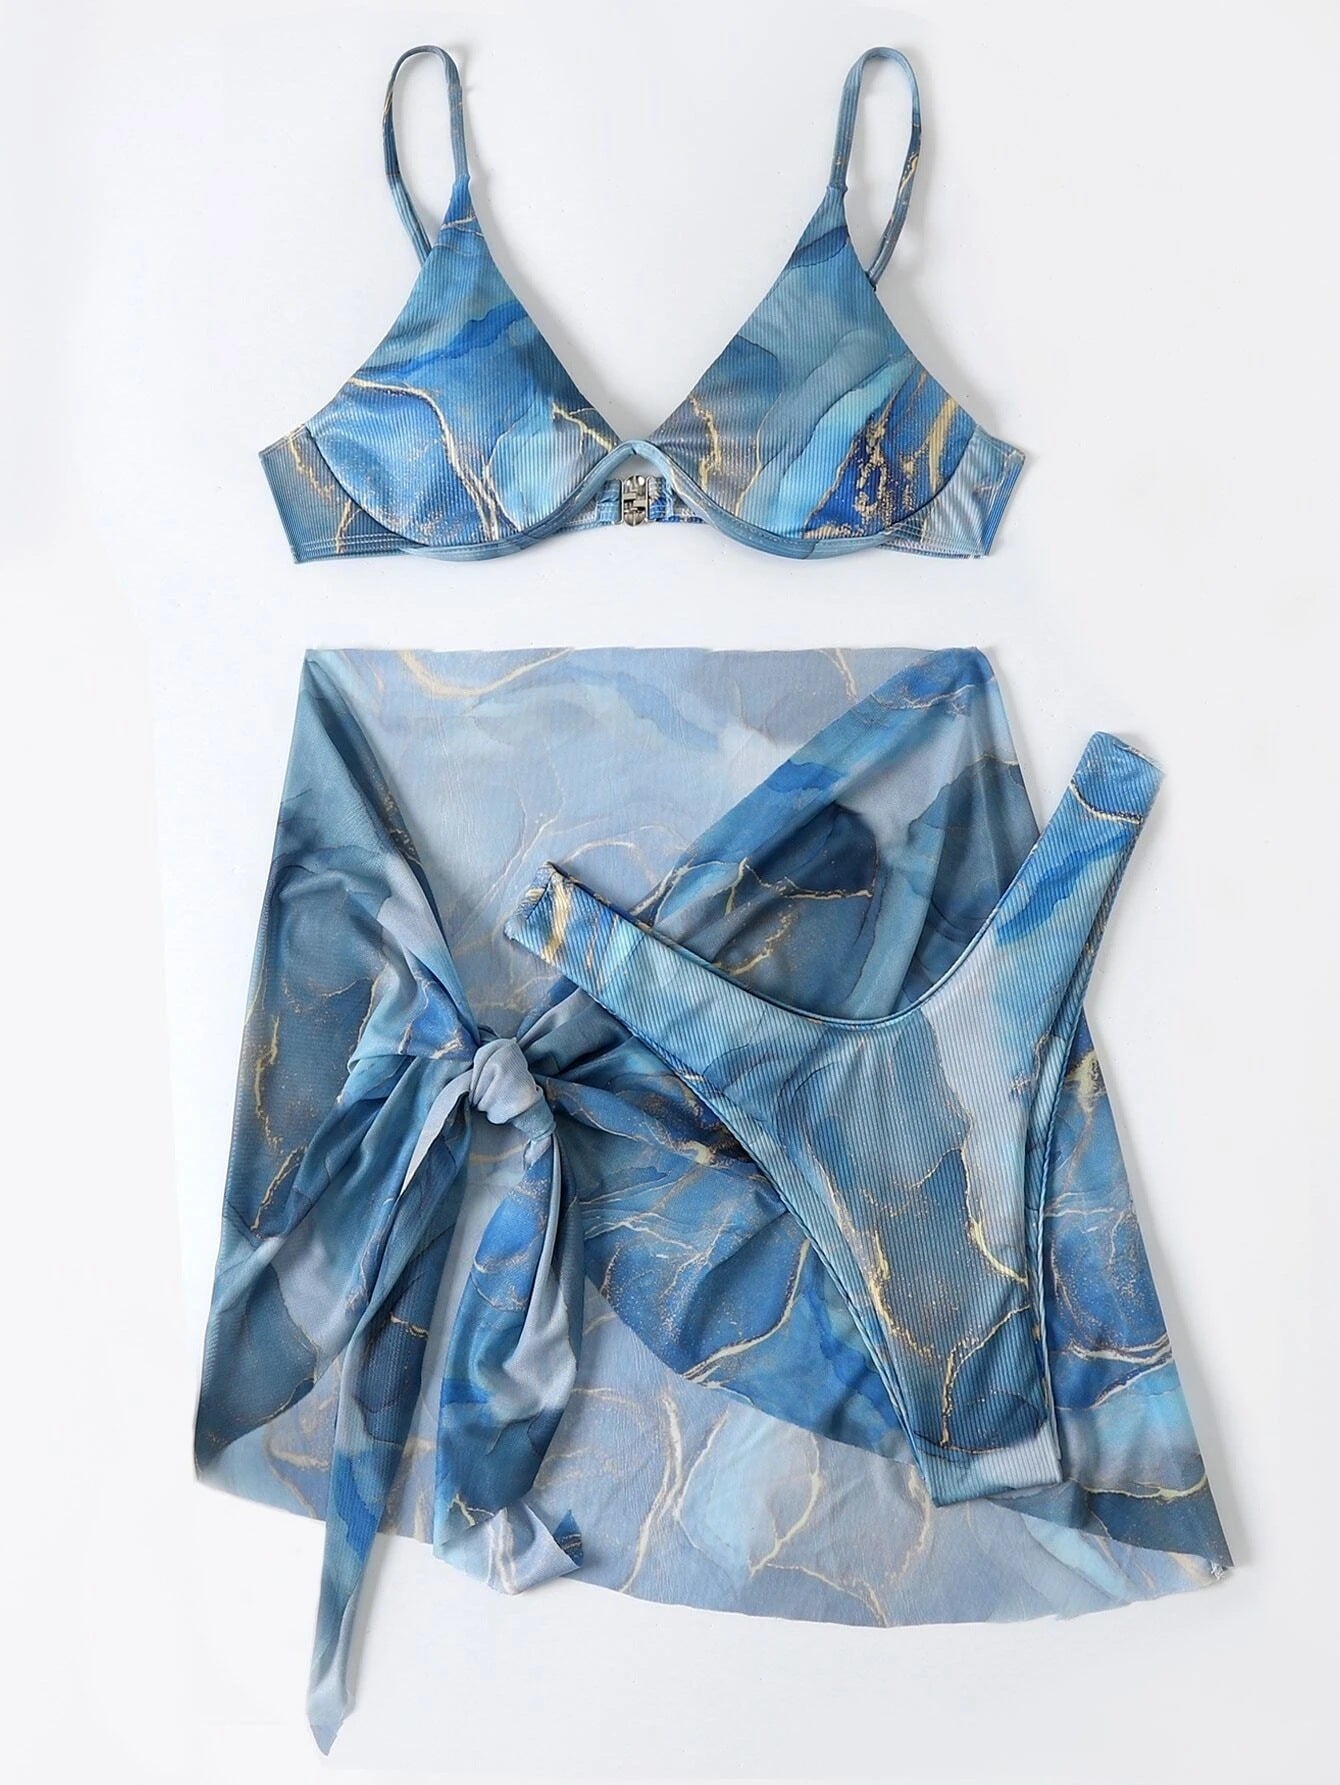 Make a Splash:  Marble Print Bikinis for Summer Fun